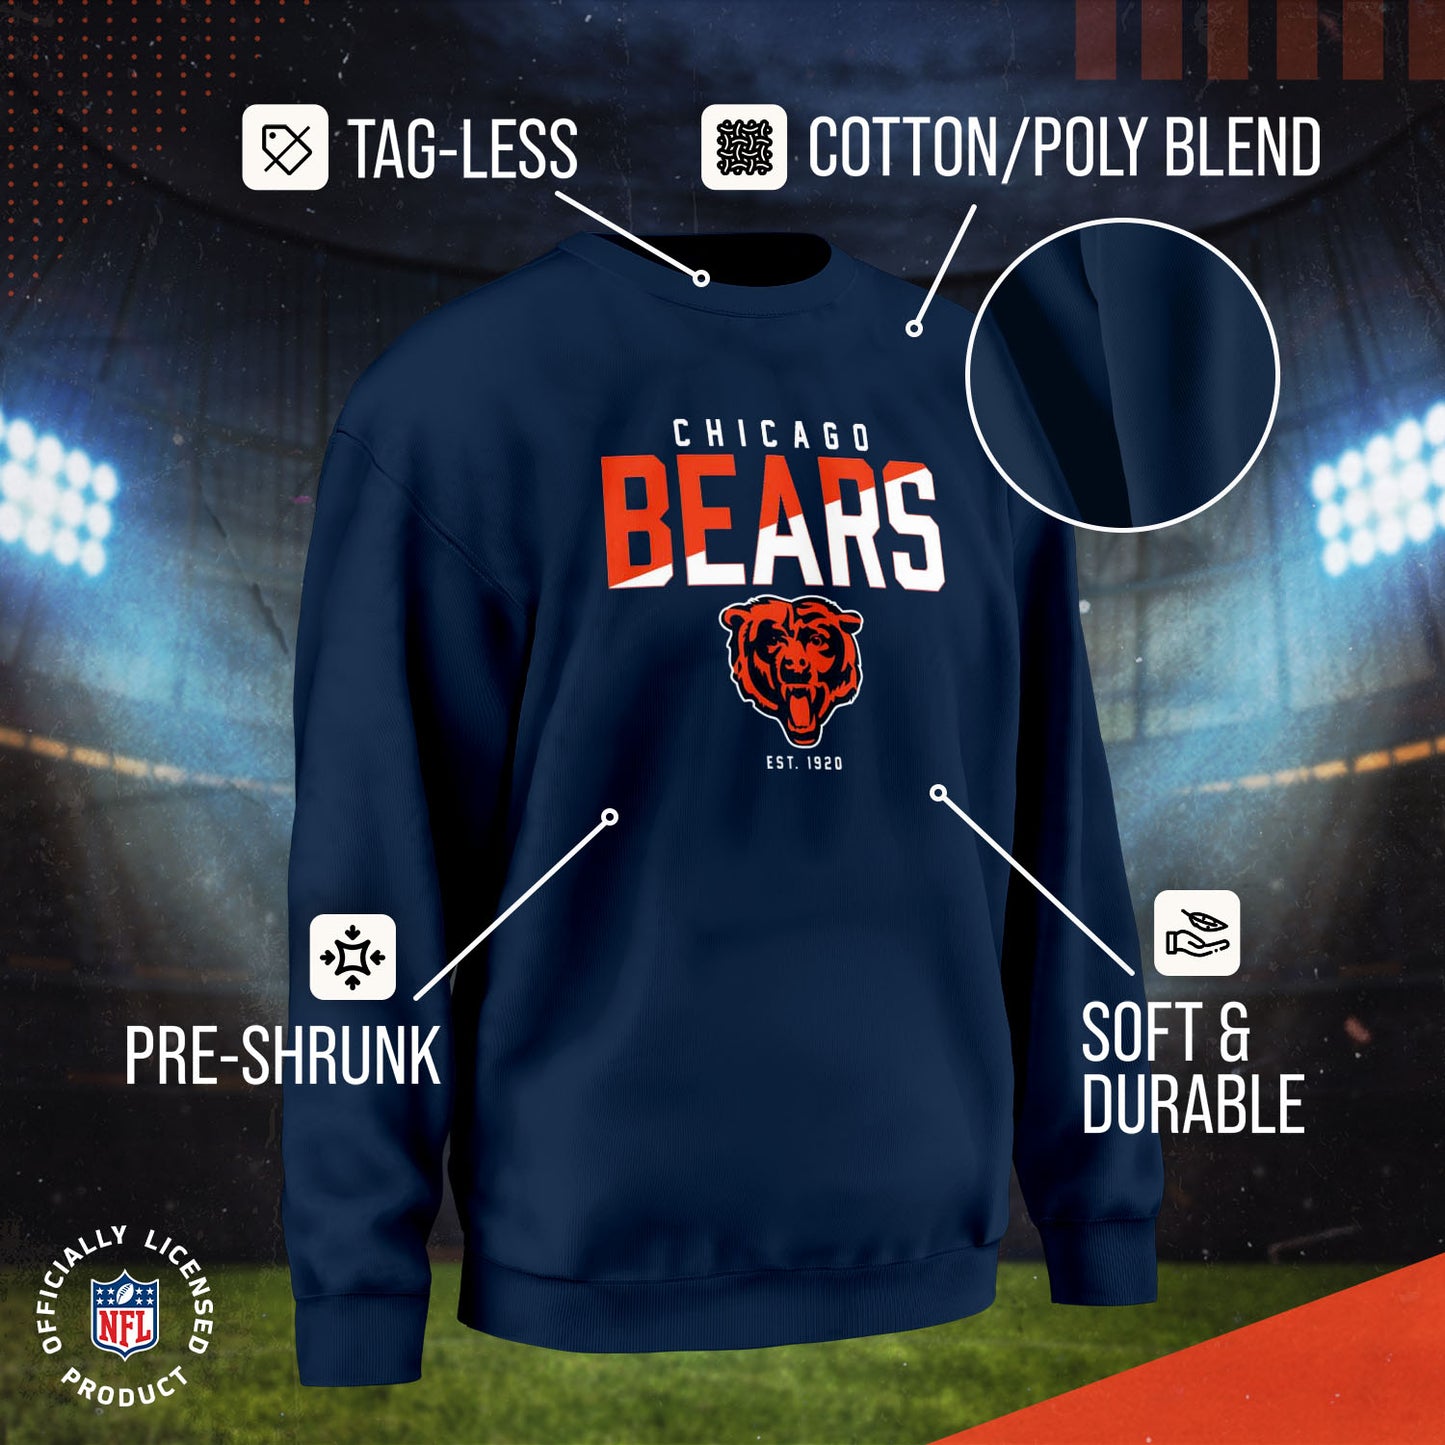 Chicago Bears Adult NFL Diagonal Fade Color Block Crewneck Sweatshirt - Navy